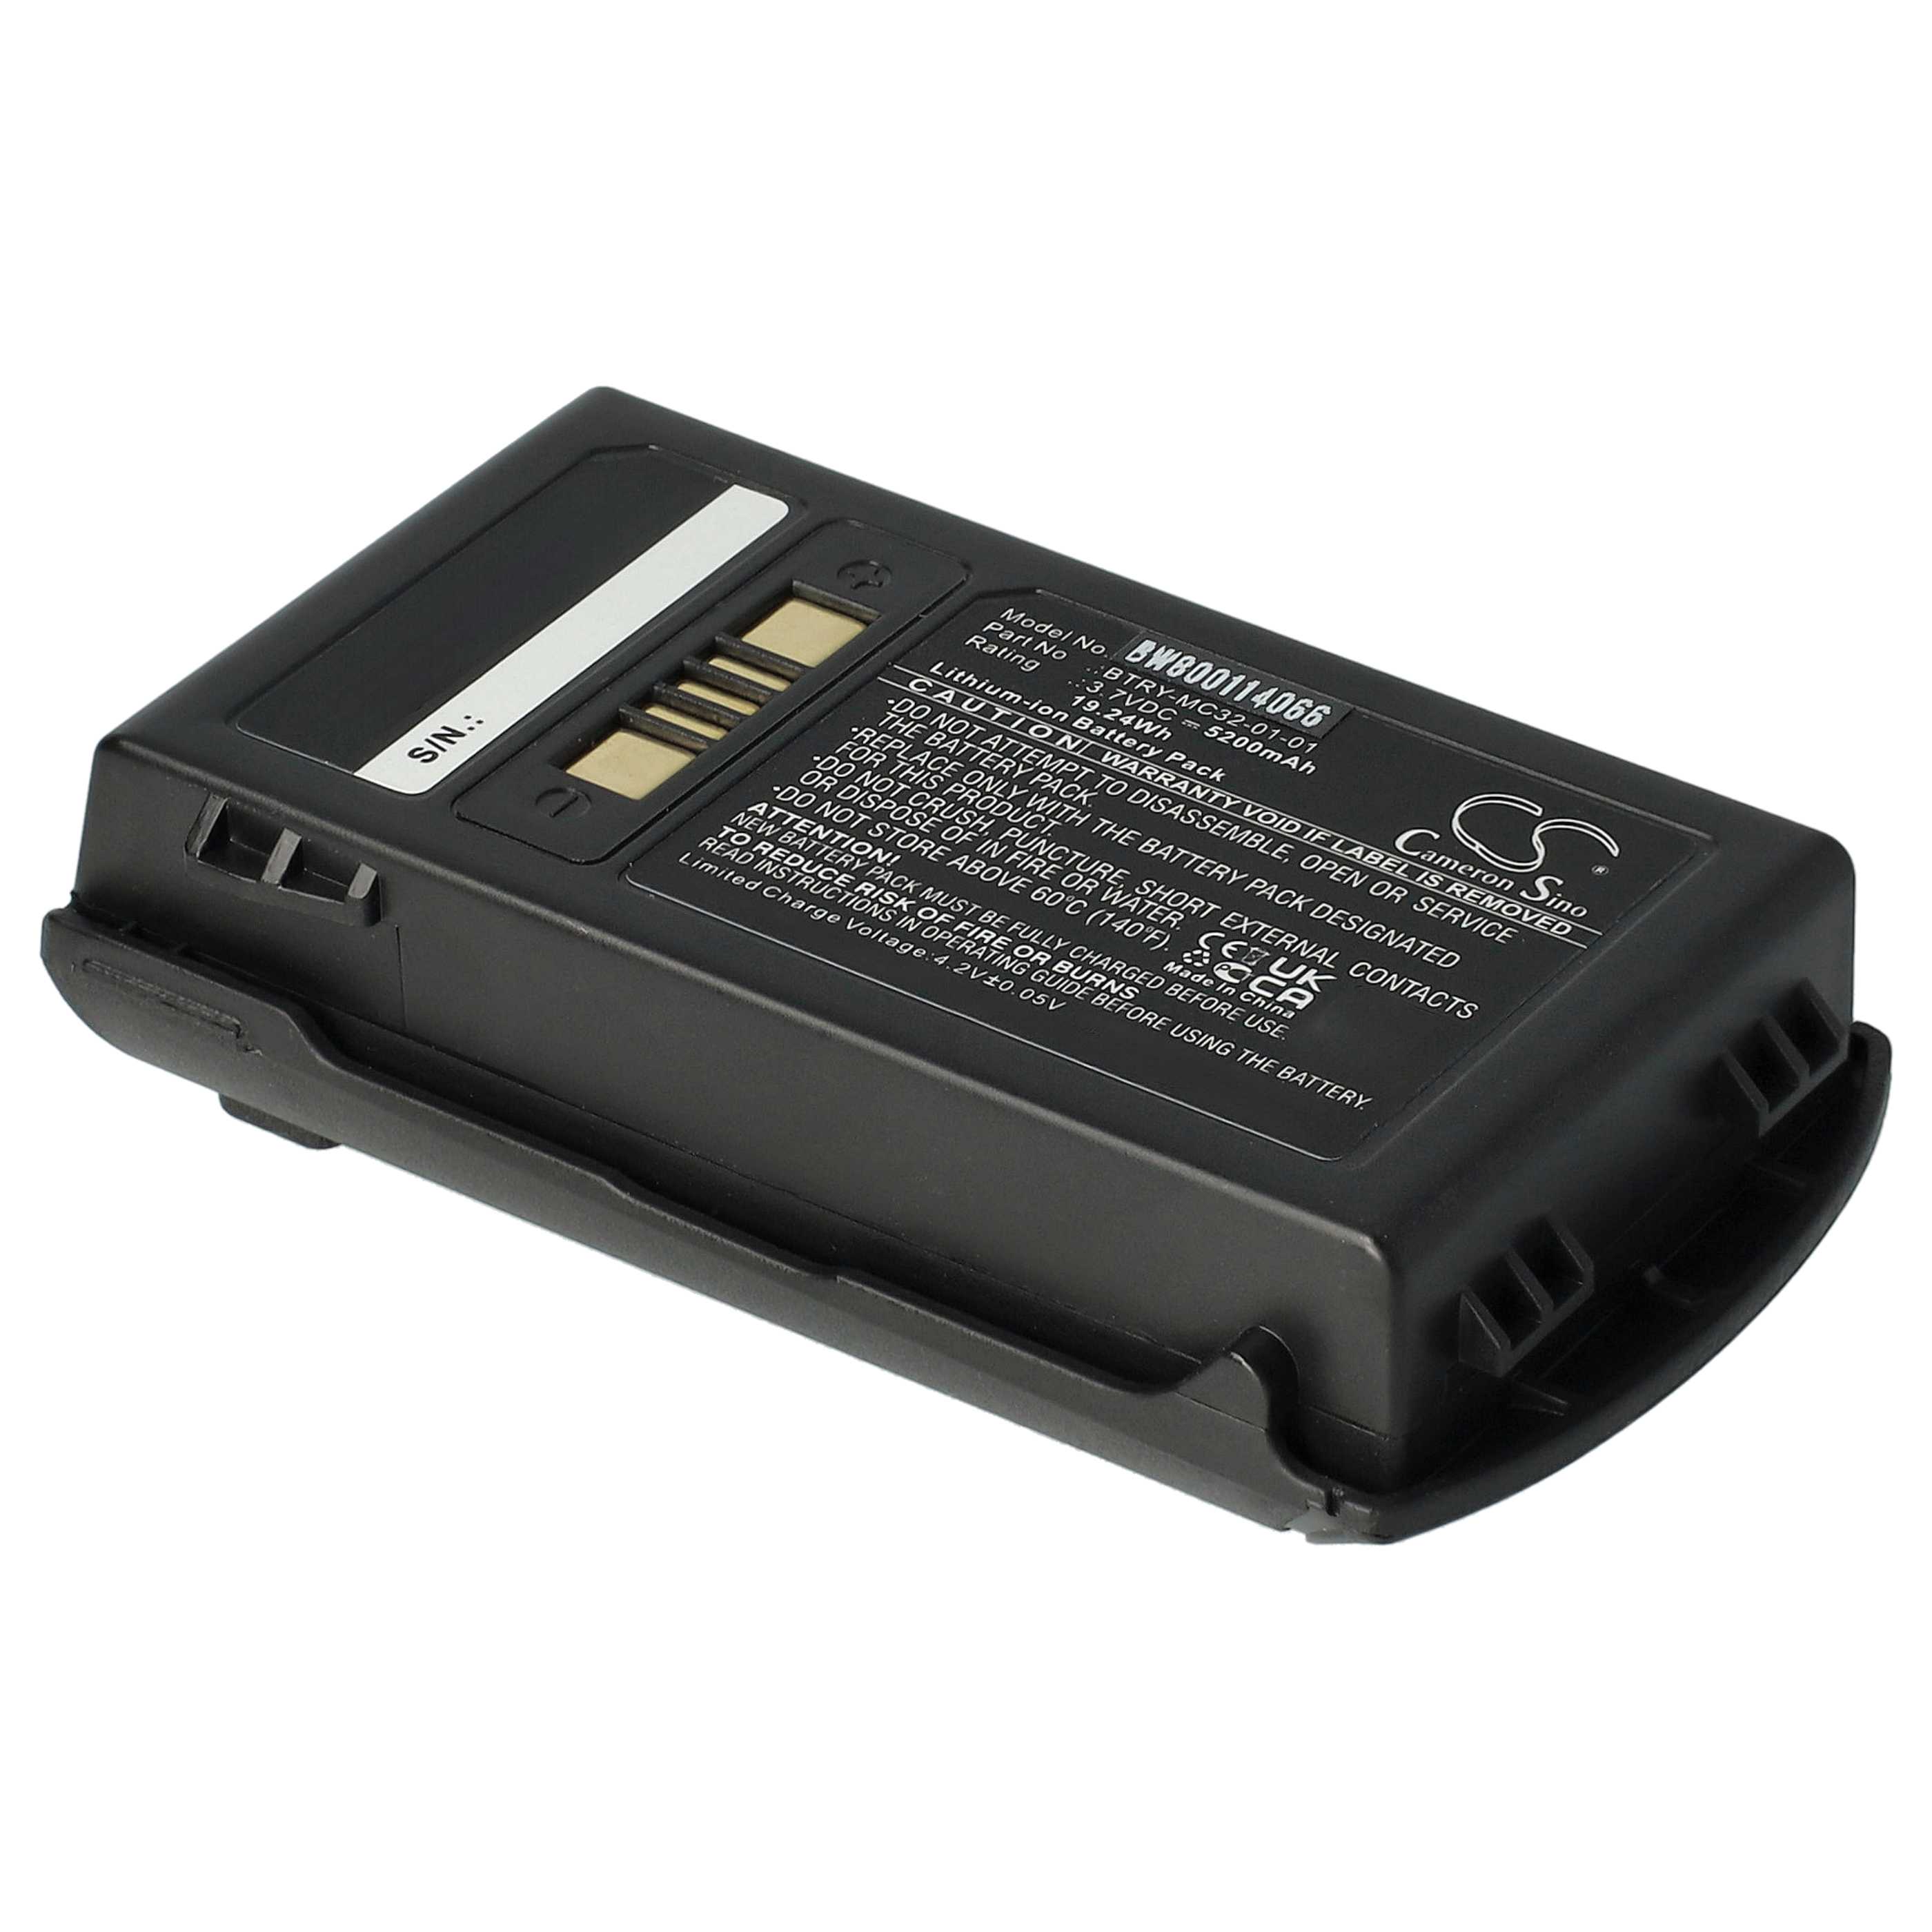 Barcode Scanner POS Battery Replacement for Motorola BTRY-MC32-01-01 - 5200mAh 3.7V Li-Ion